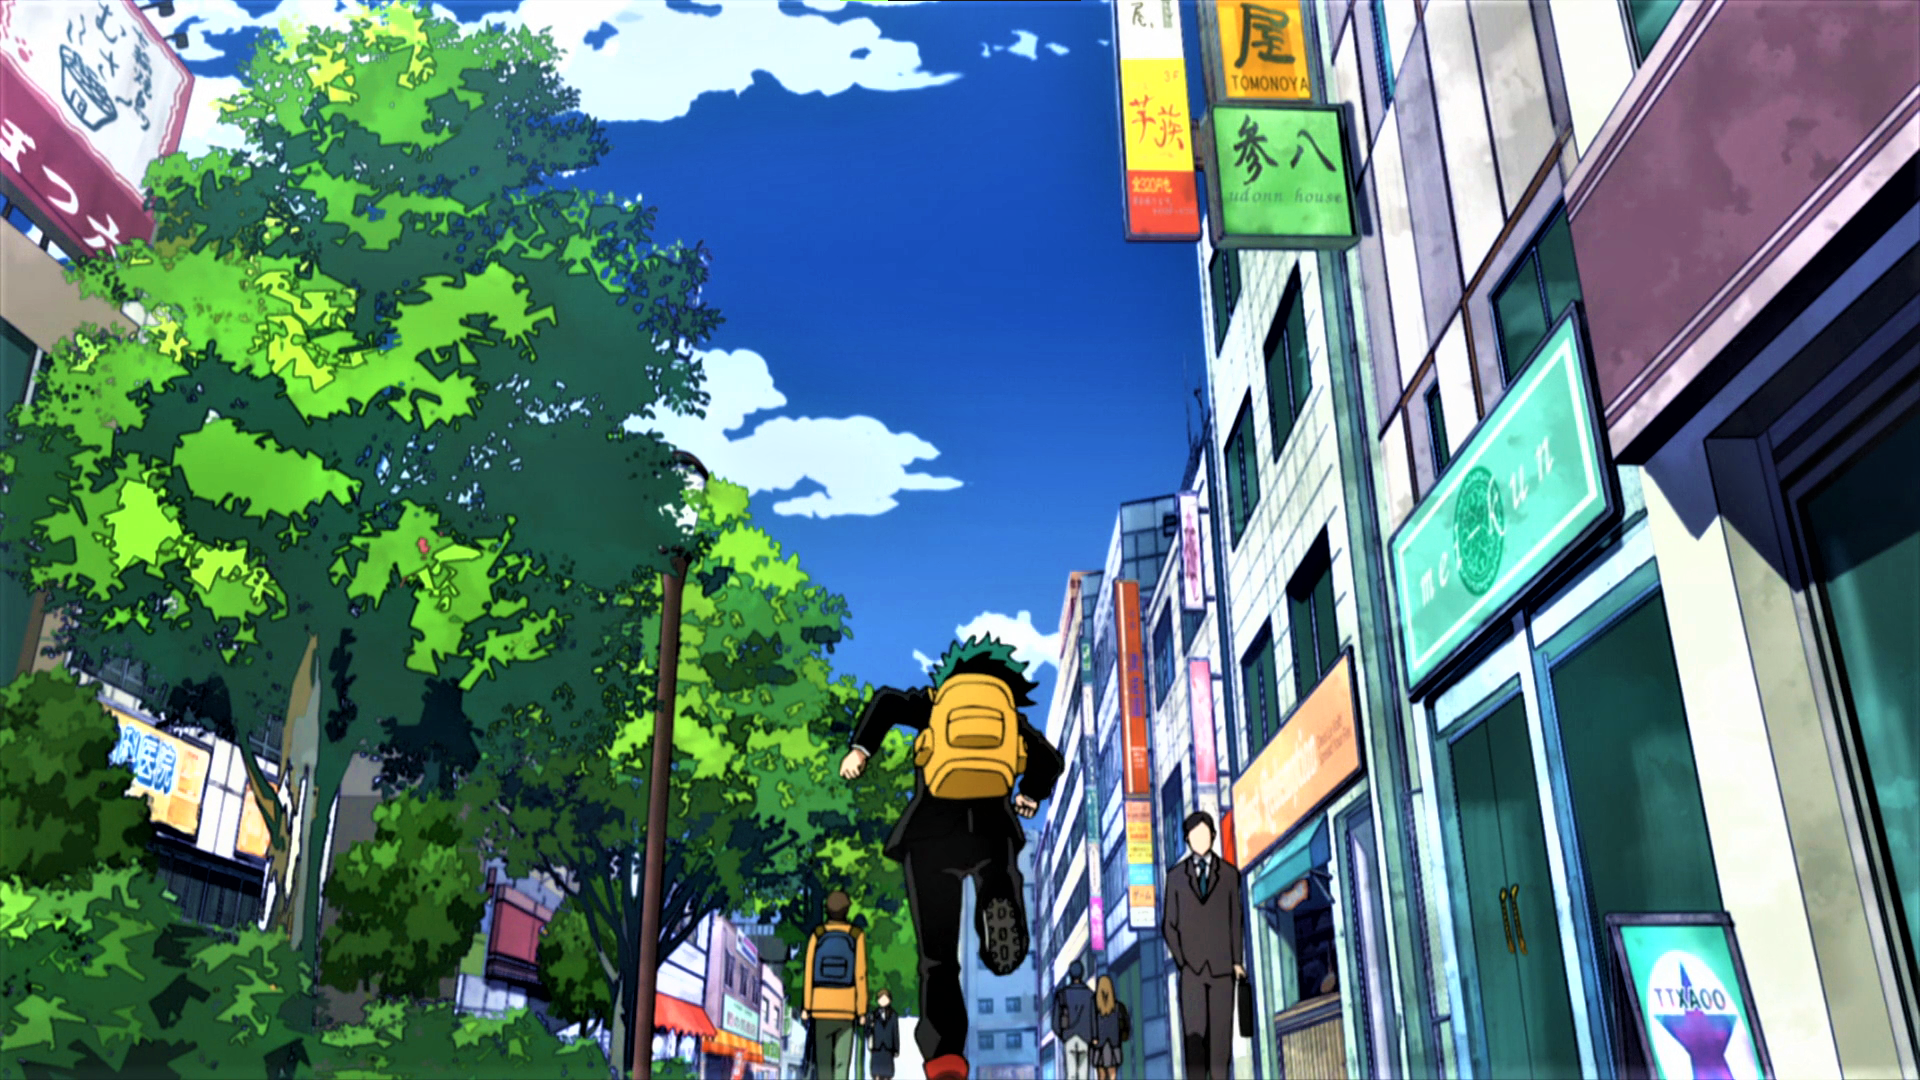 Boku No Hero Academia Deku Izuku Midoriya Running Trees Uniform Green Hair Building Sky Clouds Anime 1920x1080